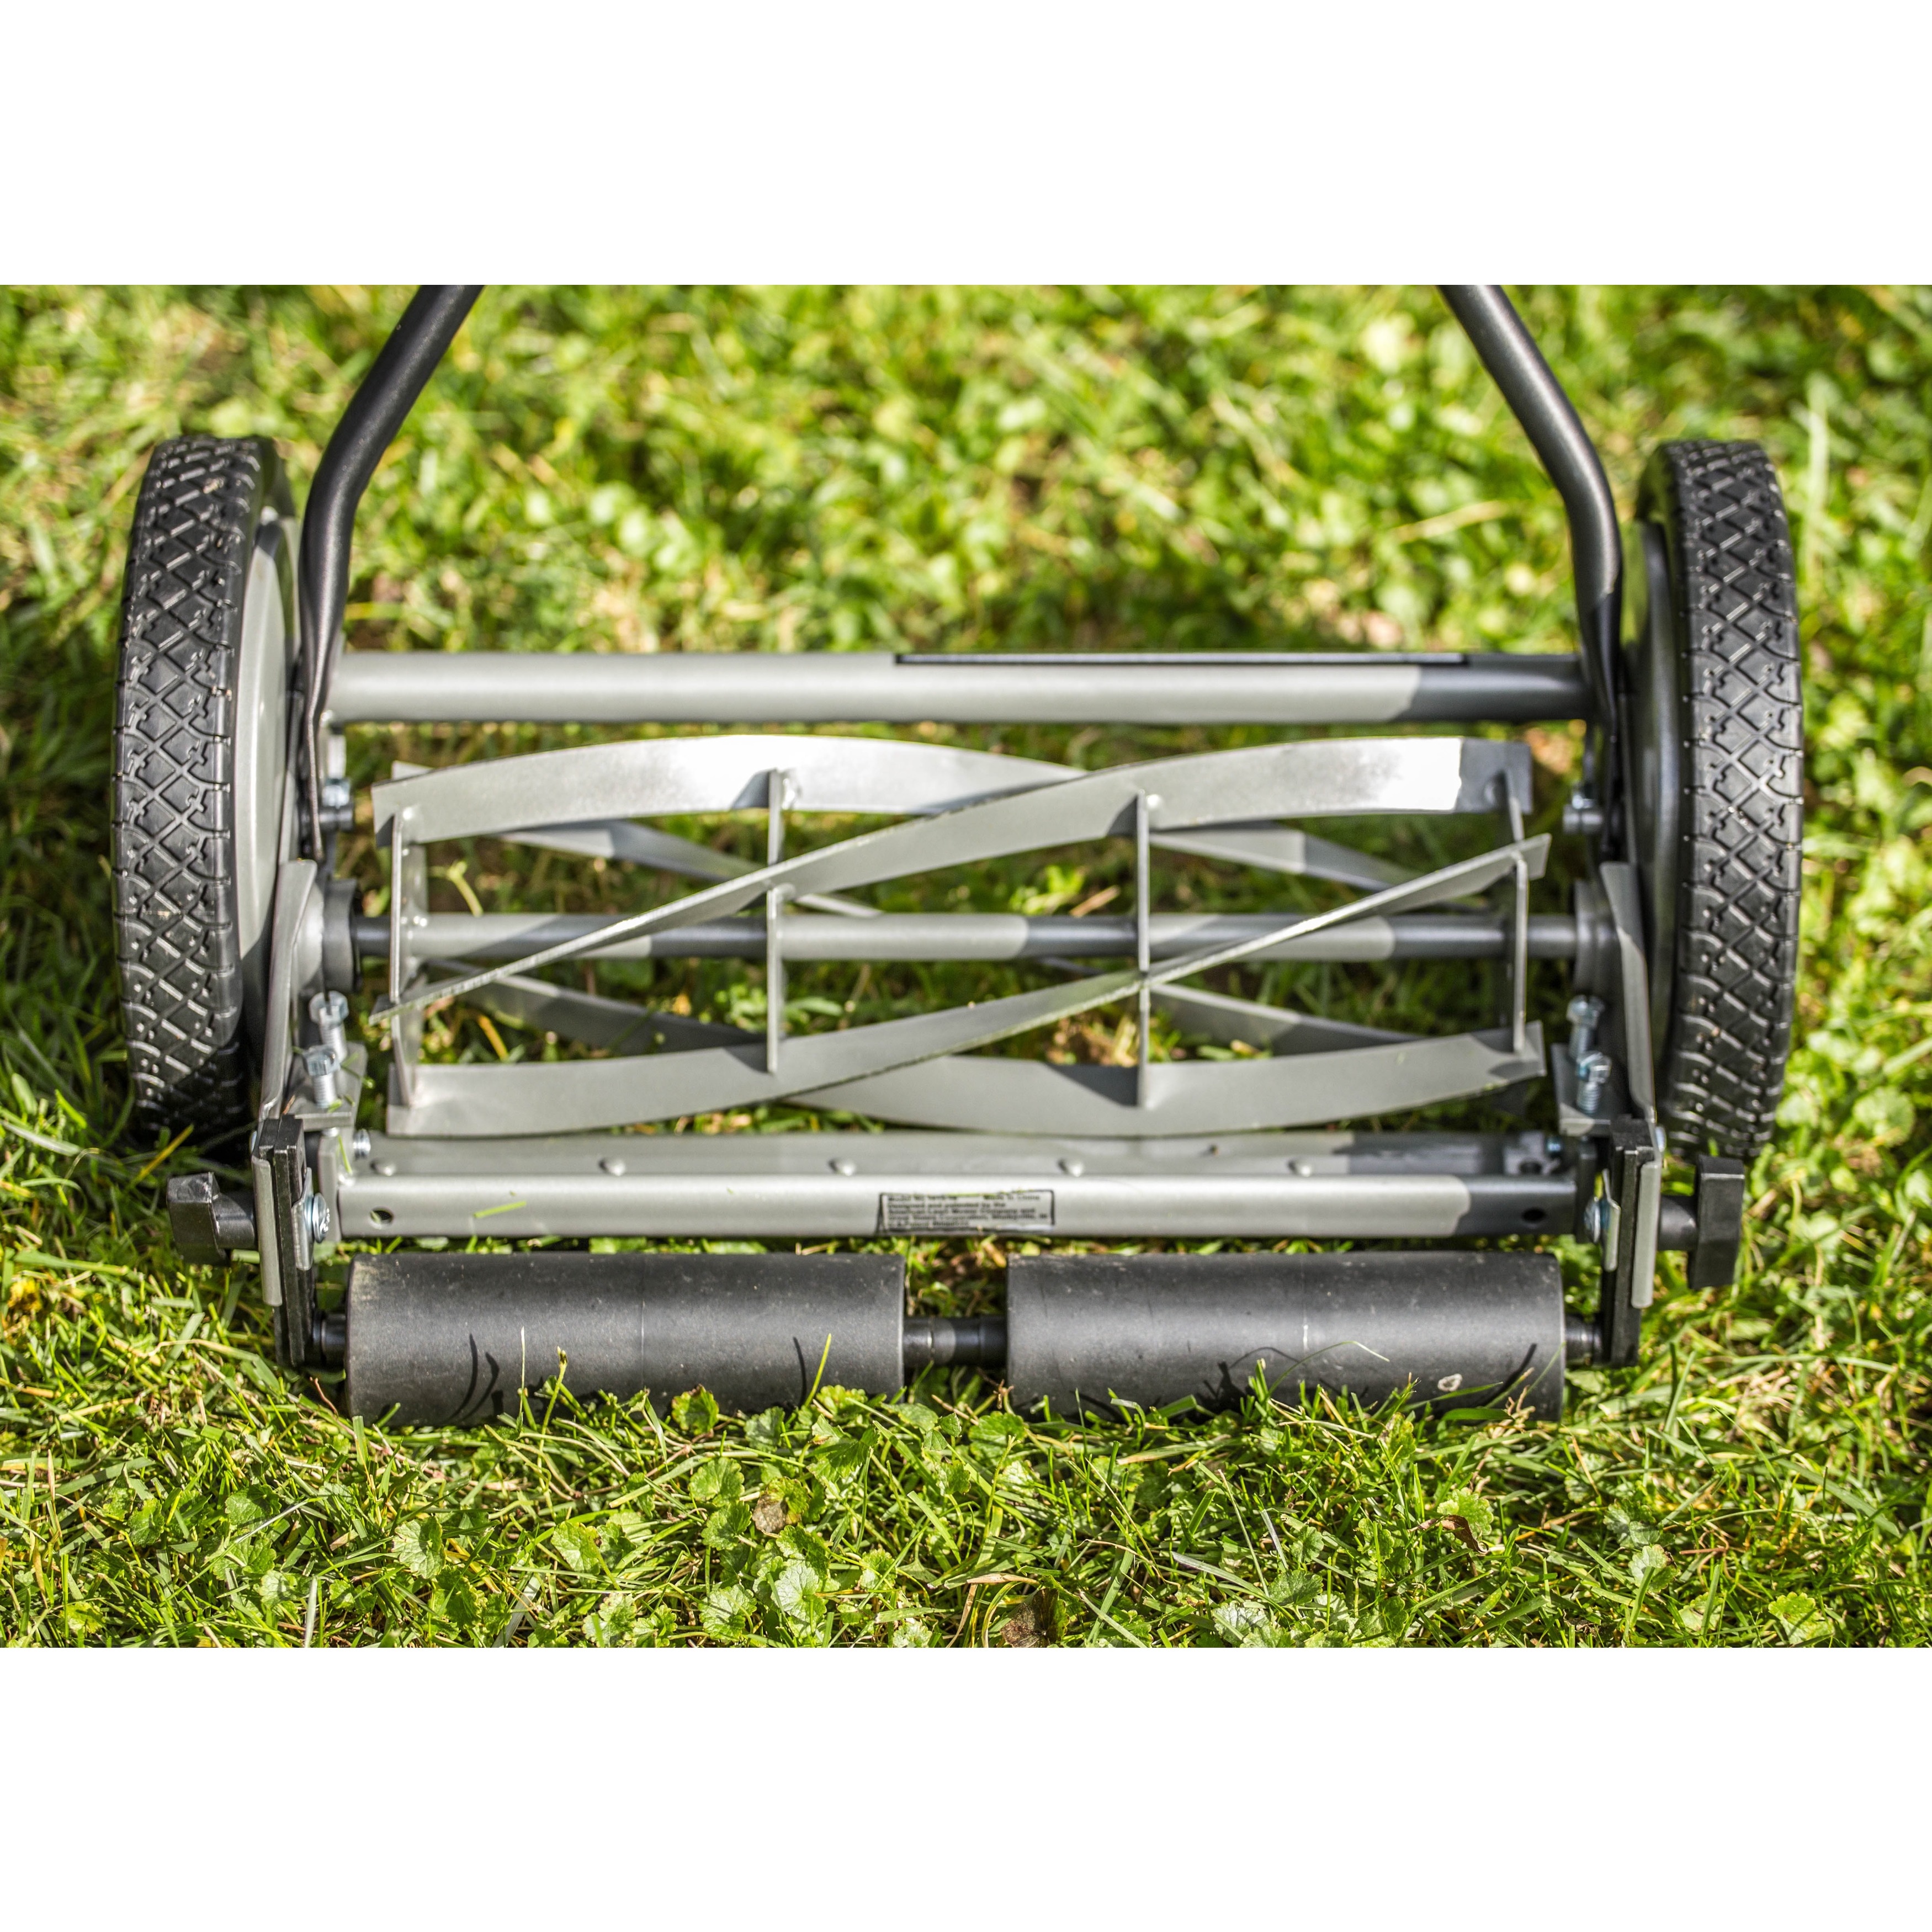 https://ak1.ostkcdn.com/images/products/4123468/American-Lawn-Mower-16-inch-Full-Feature-Reel-Mower-54b5bf96-c5b4-4634-a73f-abd34fa49305.jpg